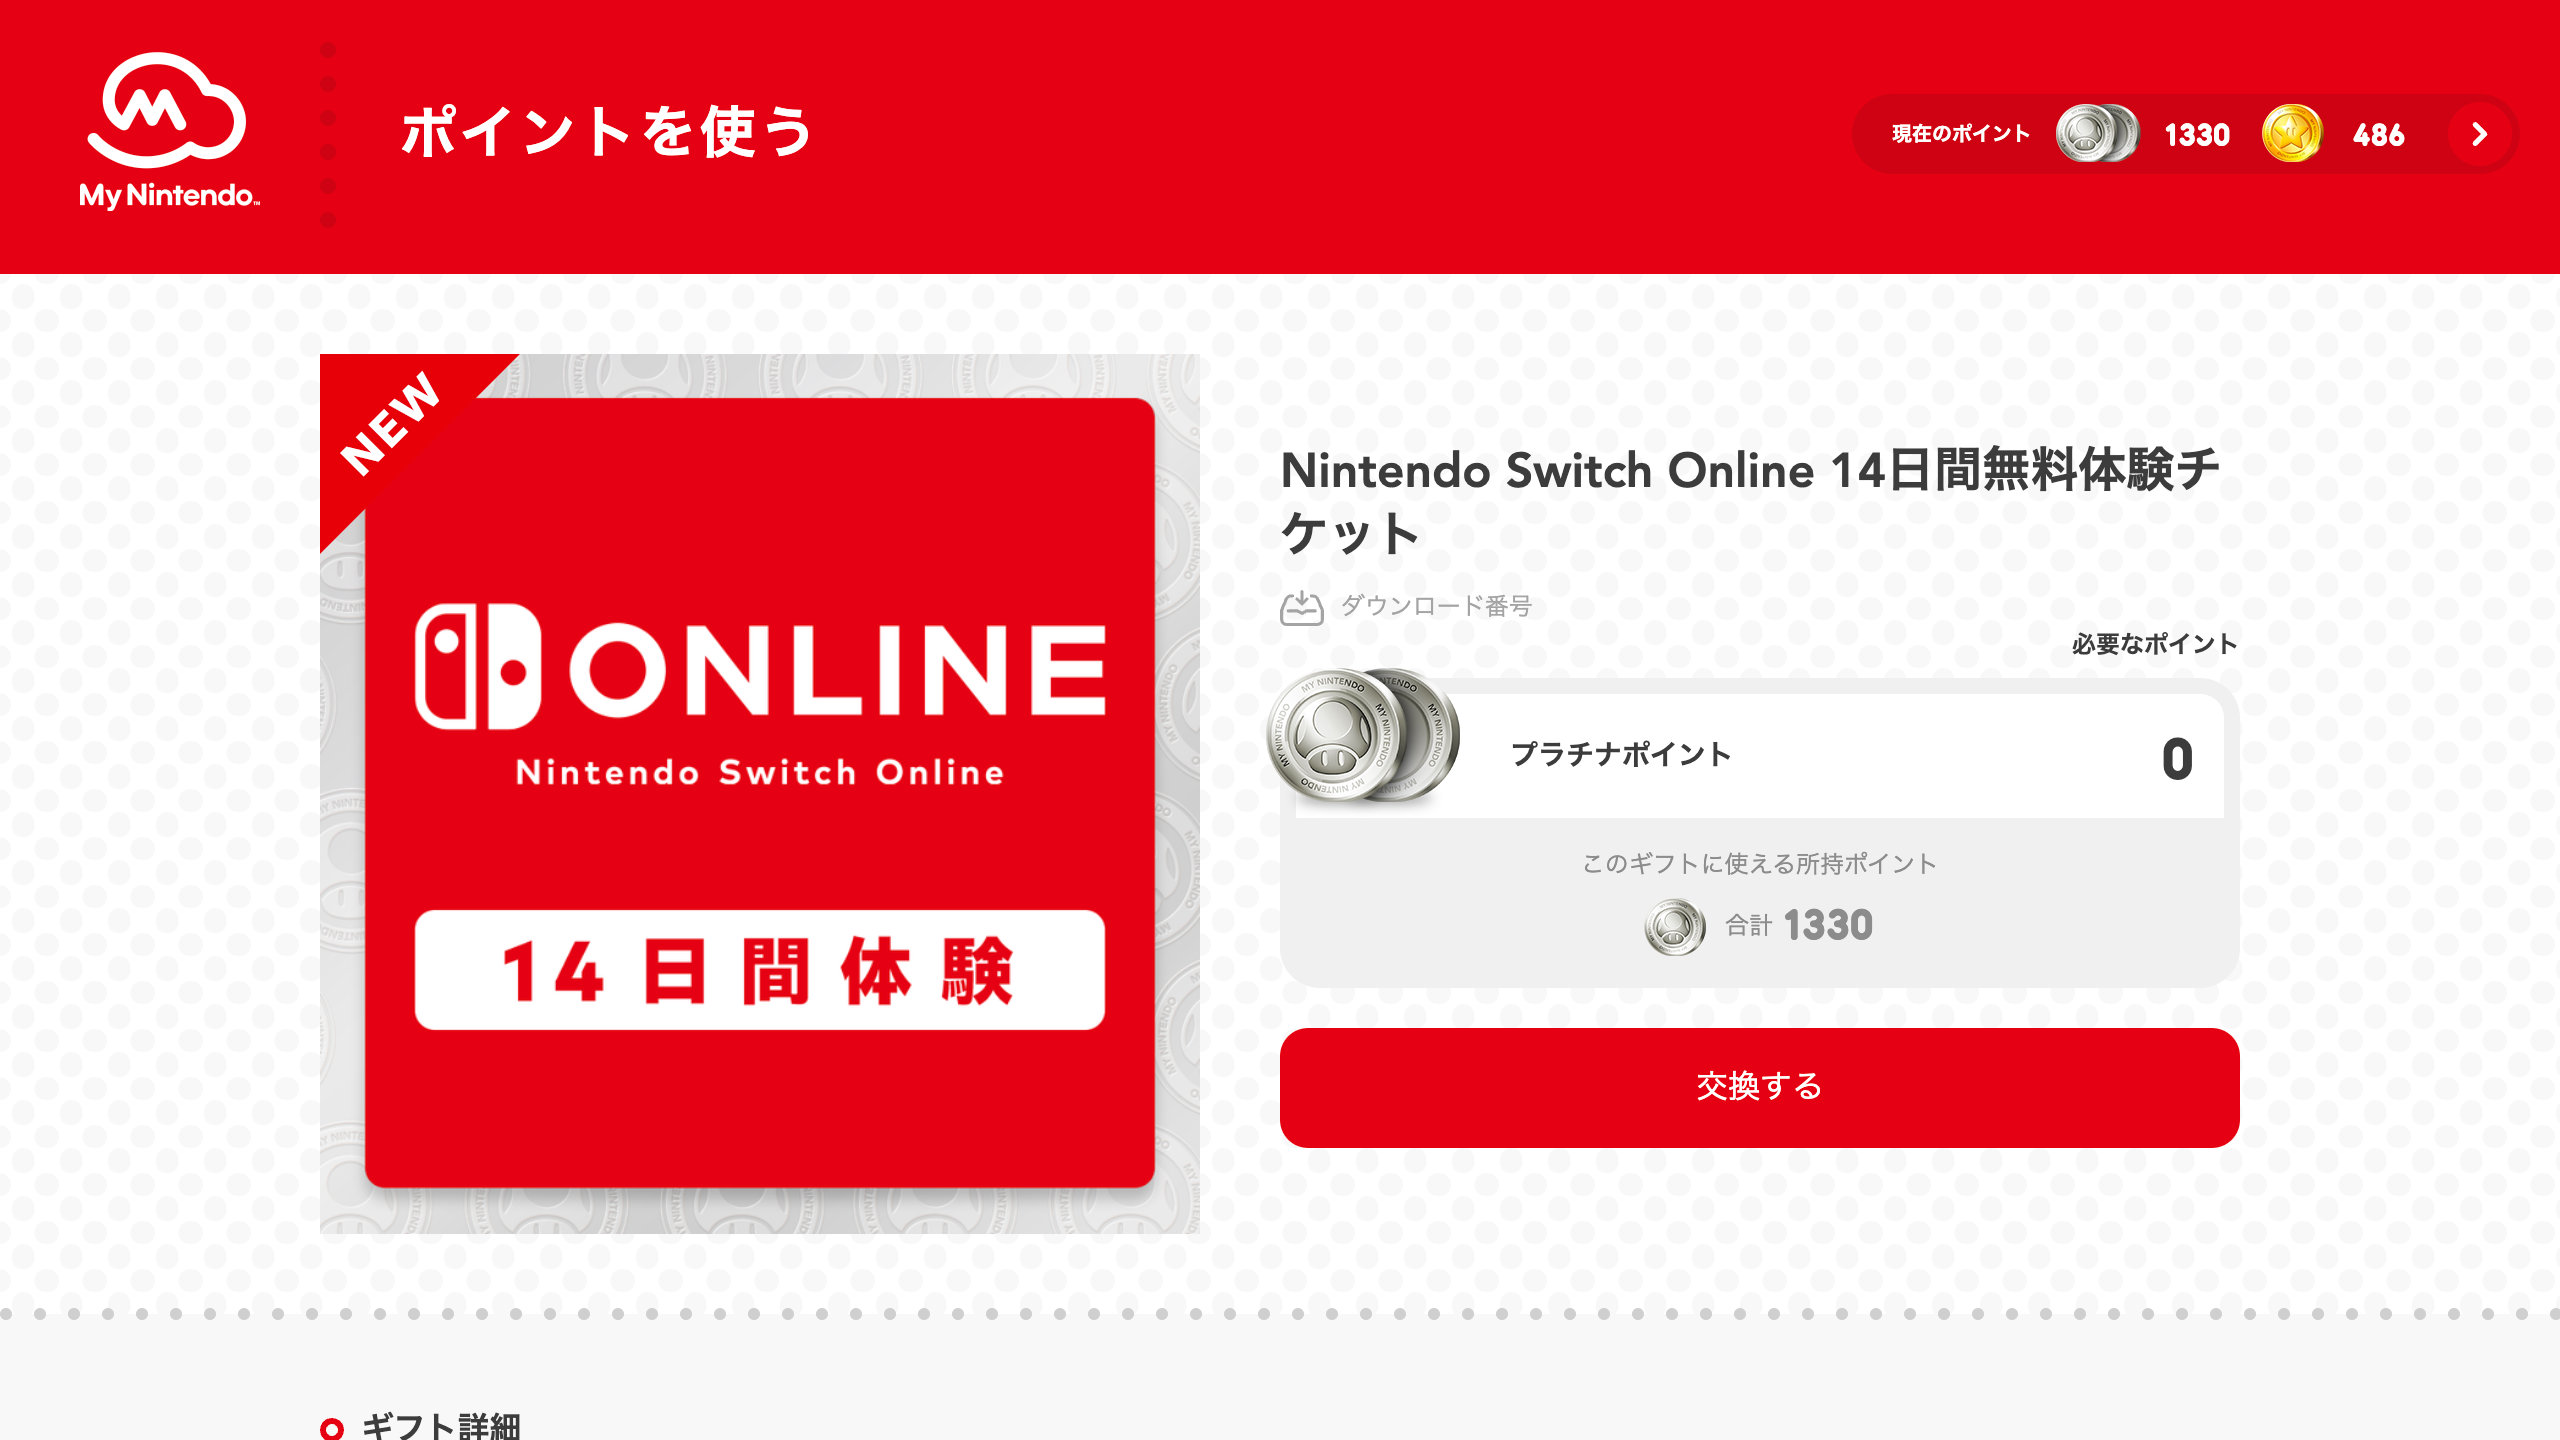 Nintendo Switch Online 14日間無料体験